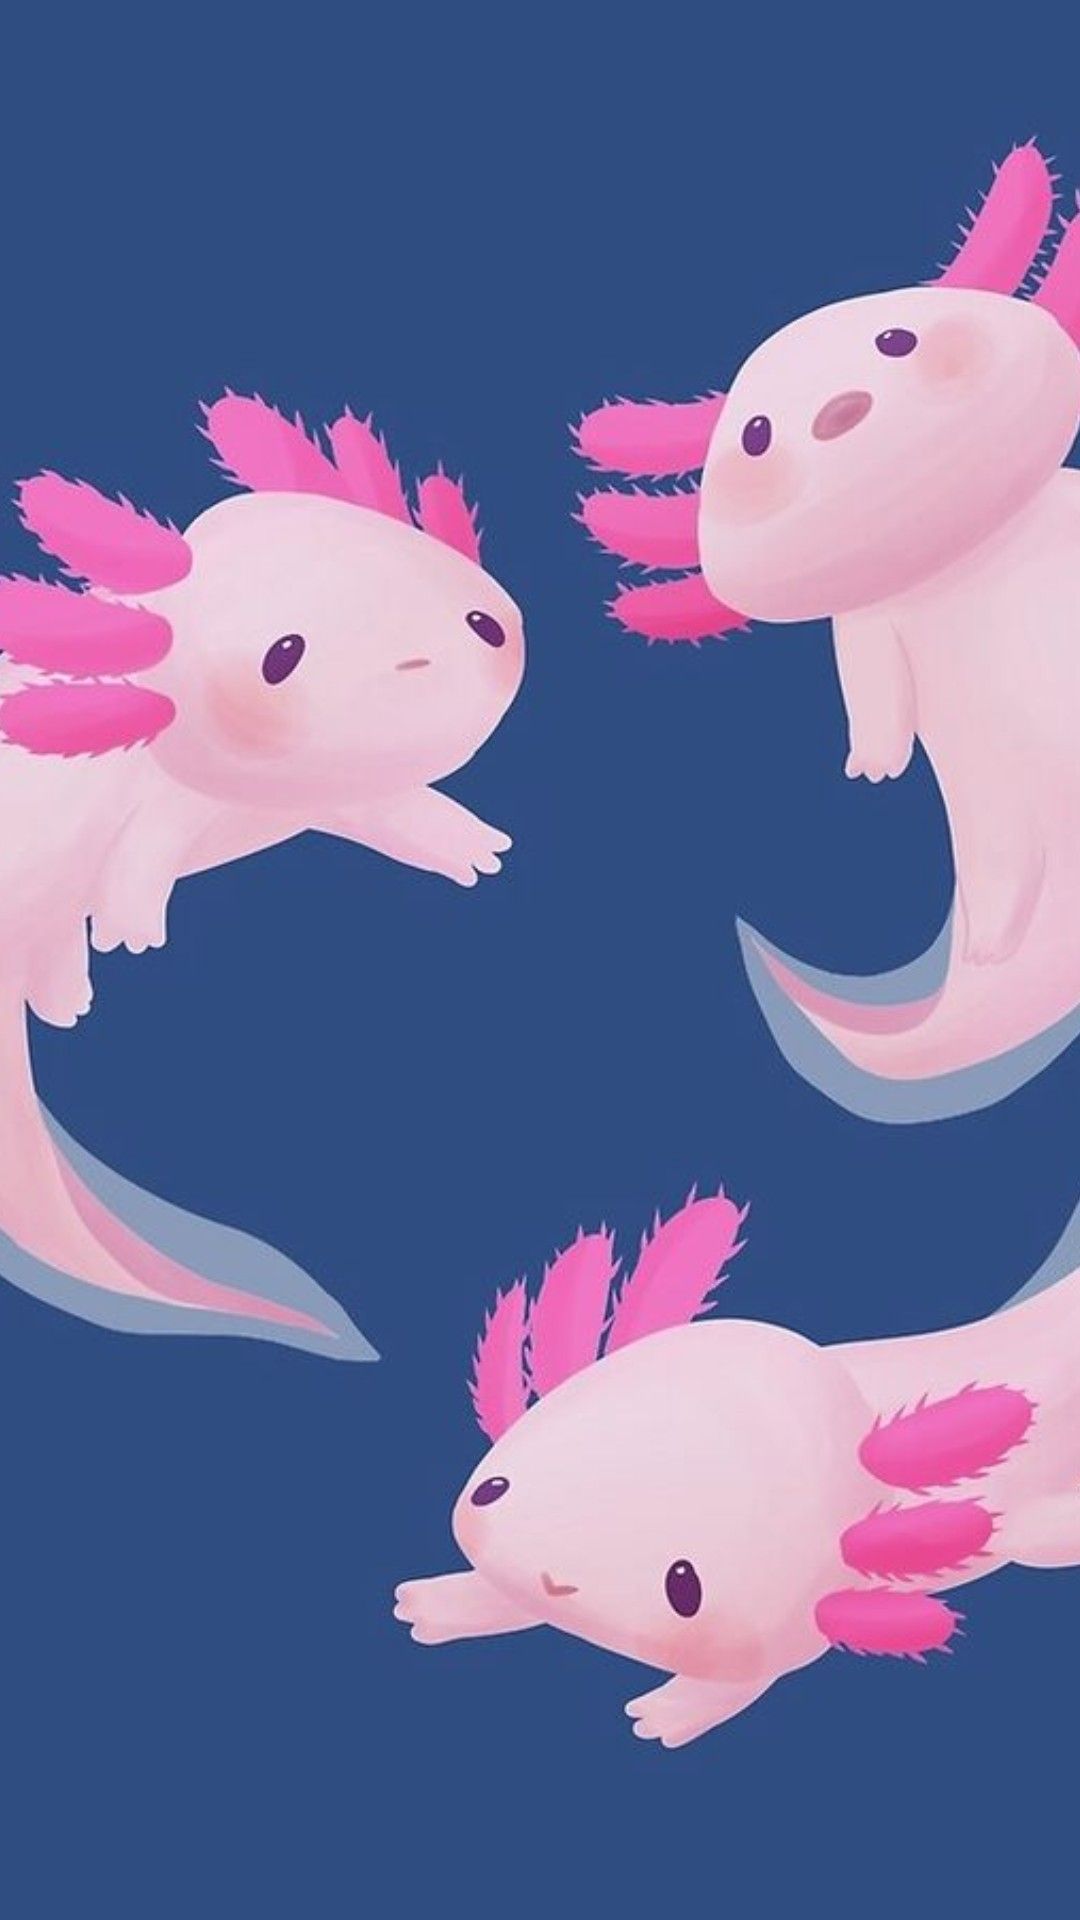 IPhone wallpaper with axolotls. - Axolotl